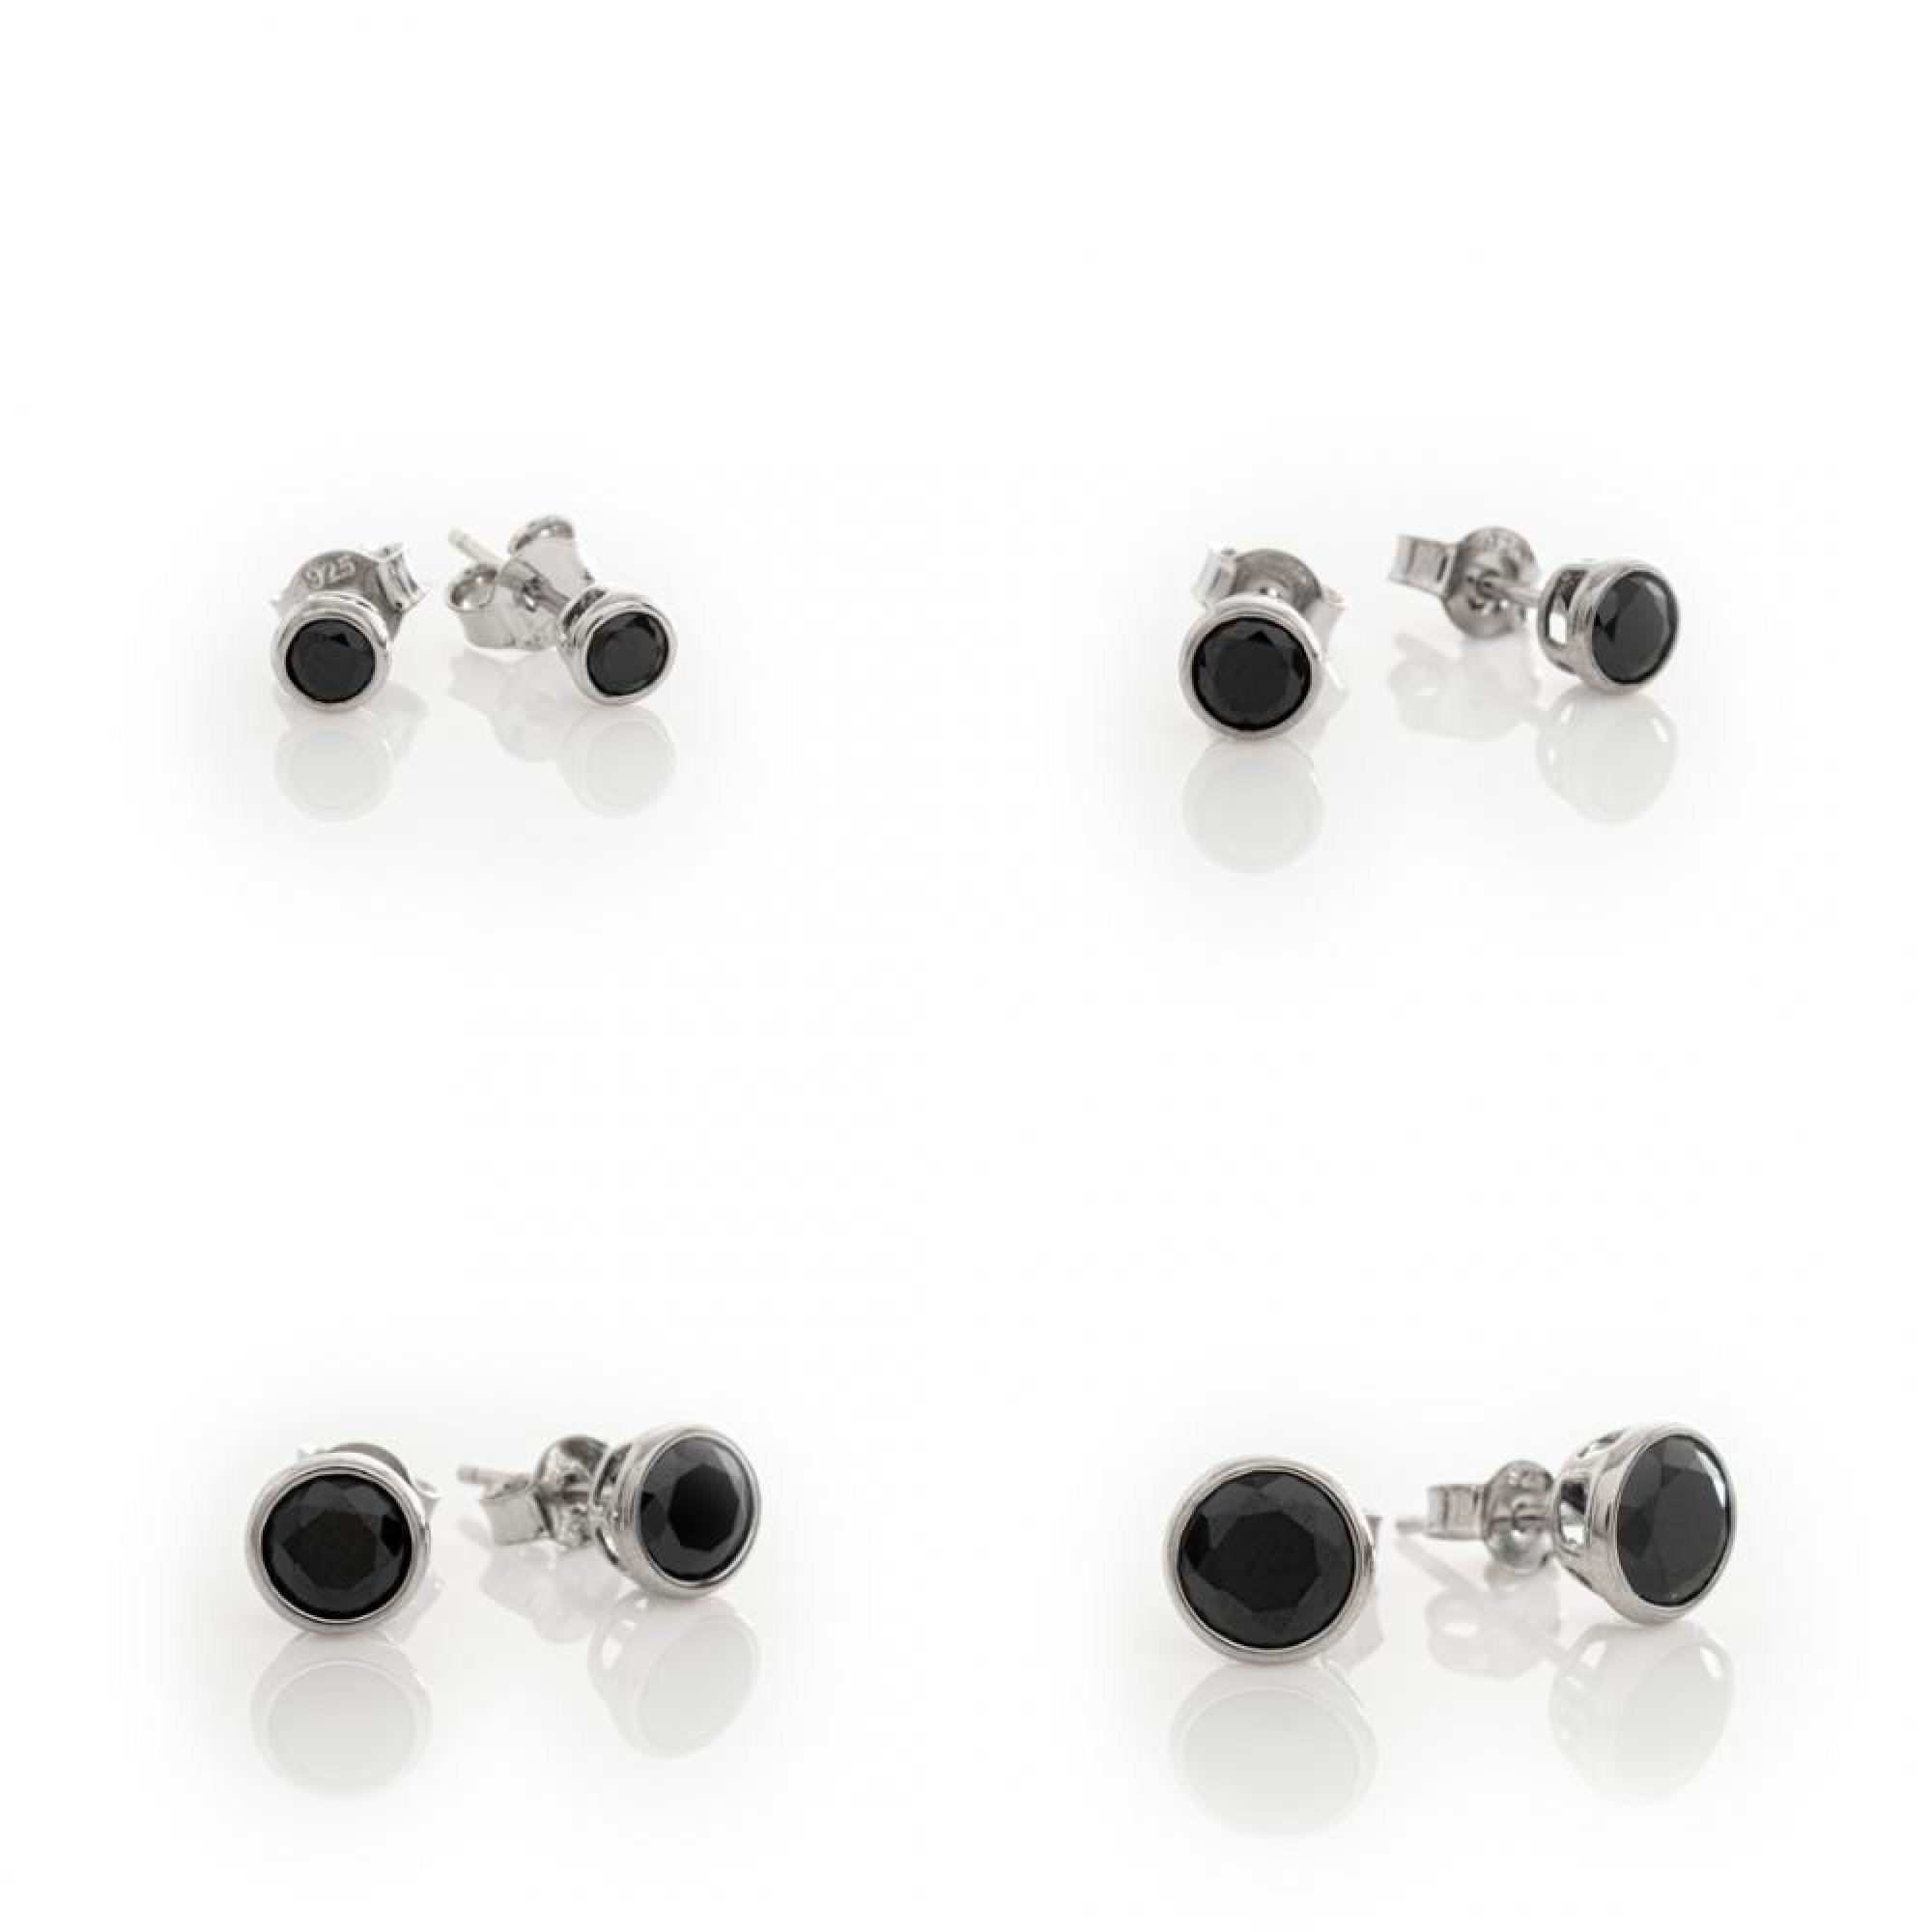 Silver stud earrings with black zircon stones